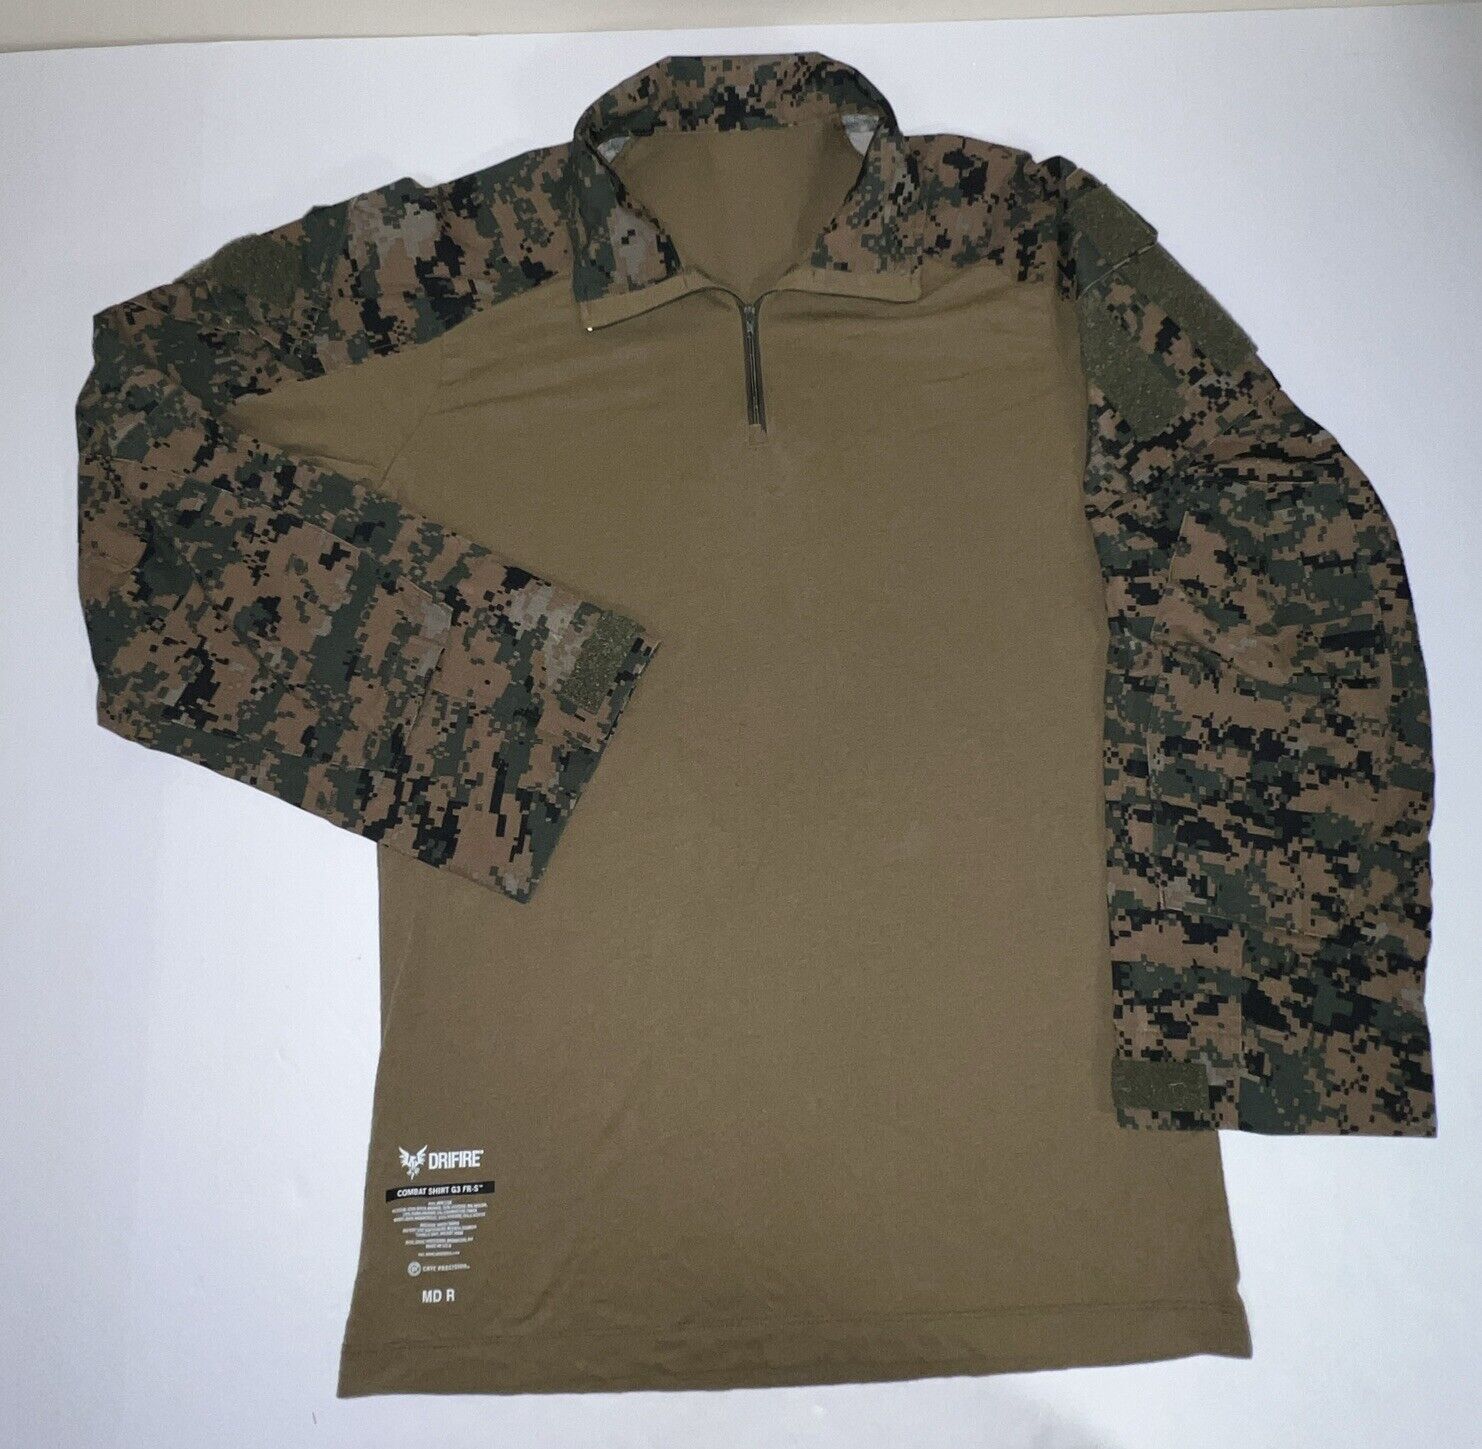 Crye Precision DRIFIRE Woodland MARPAT Combat Shirt G3 FR-S, sz: MD R